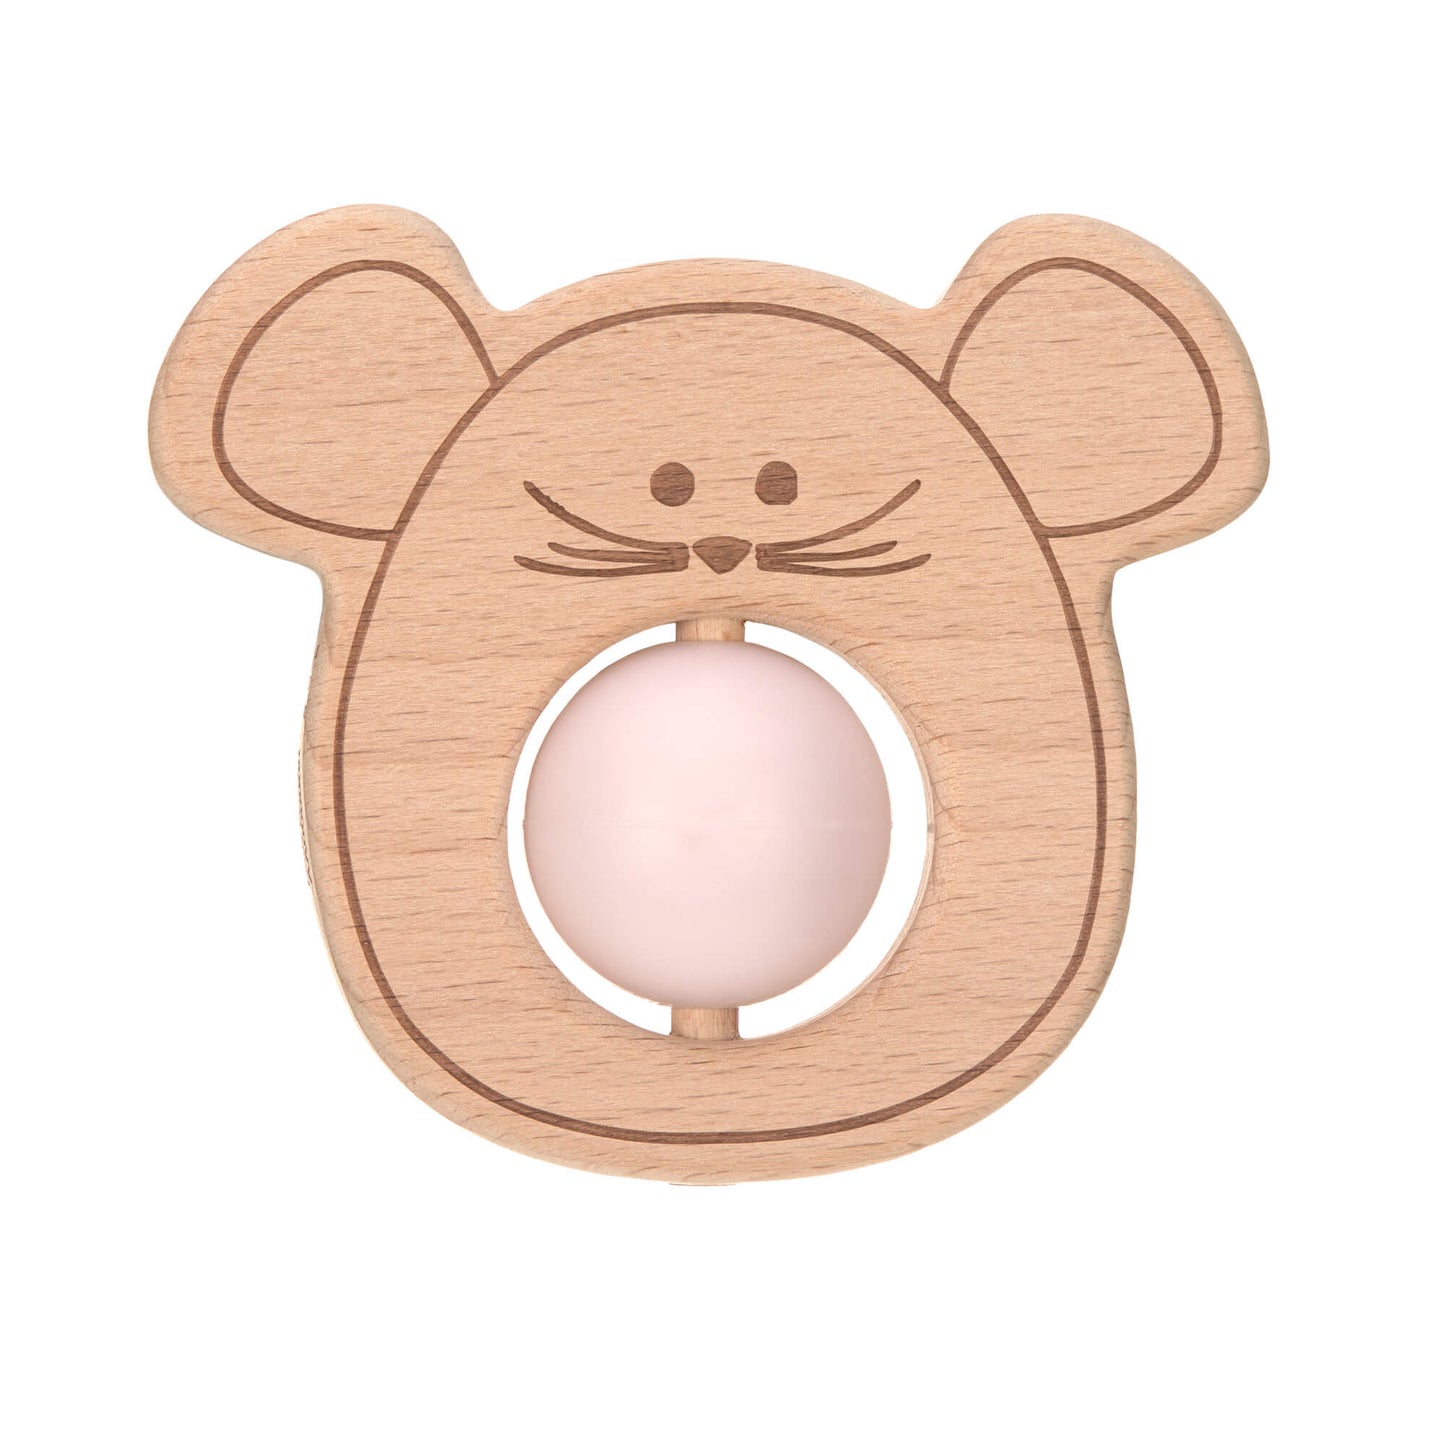 Greifling mit Beißhilfe - Teether Ball, Little Chums Mouse